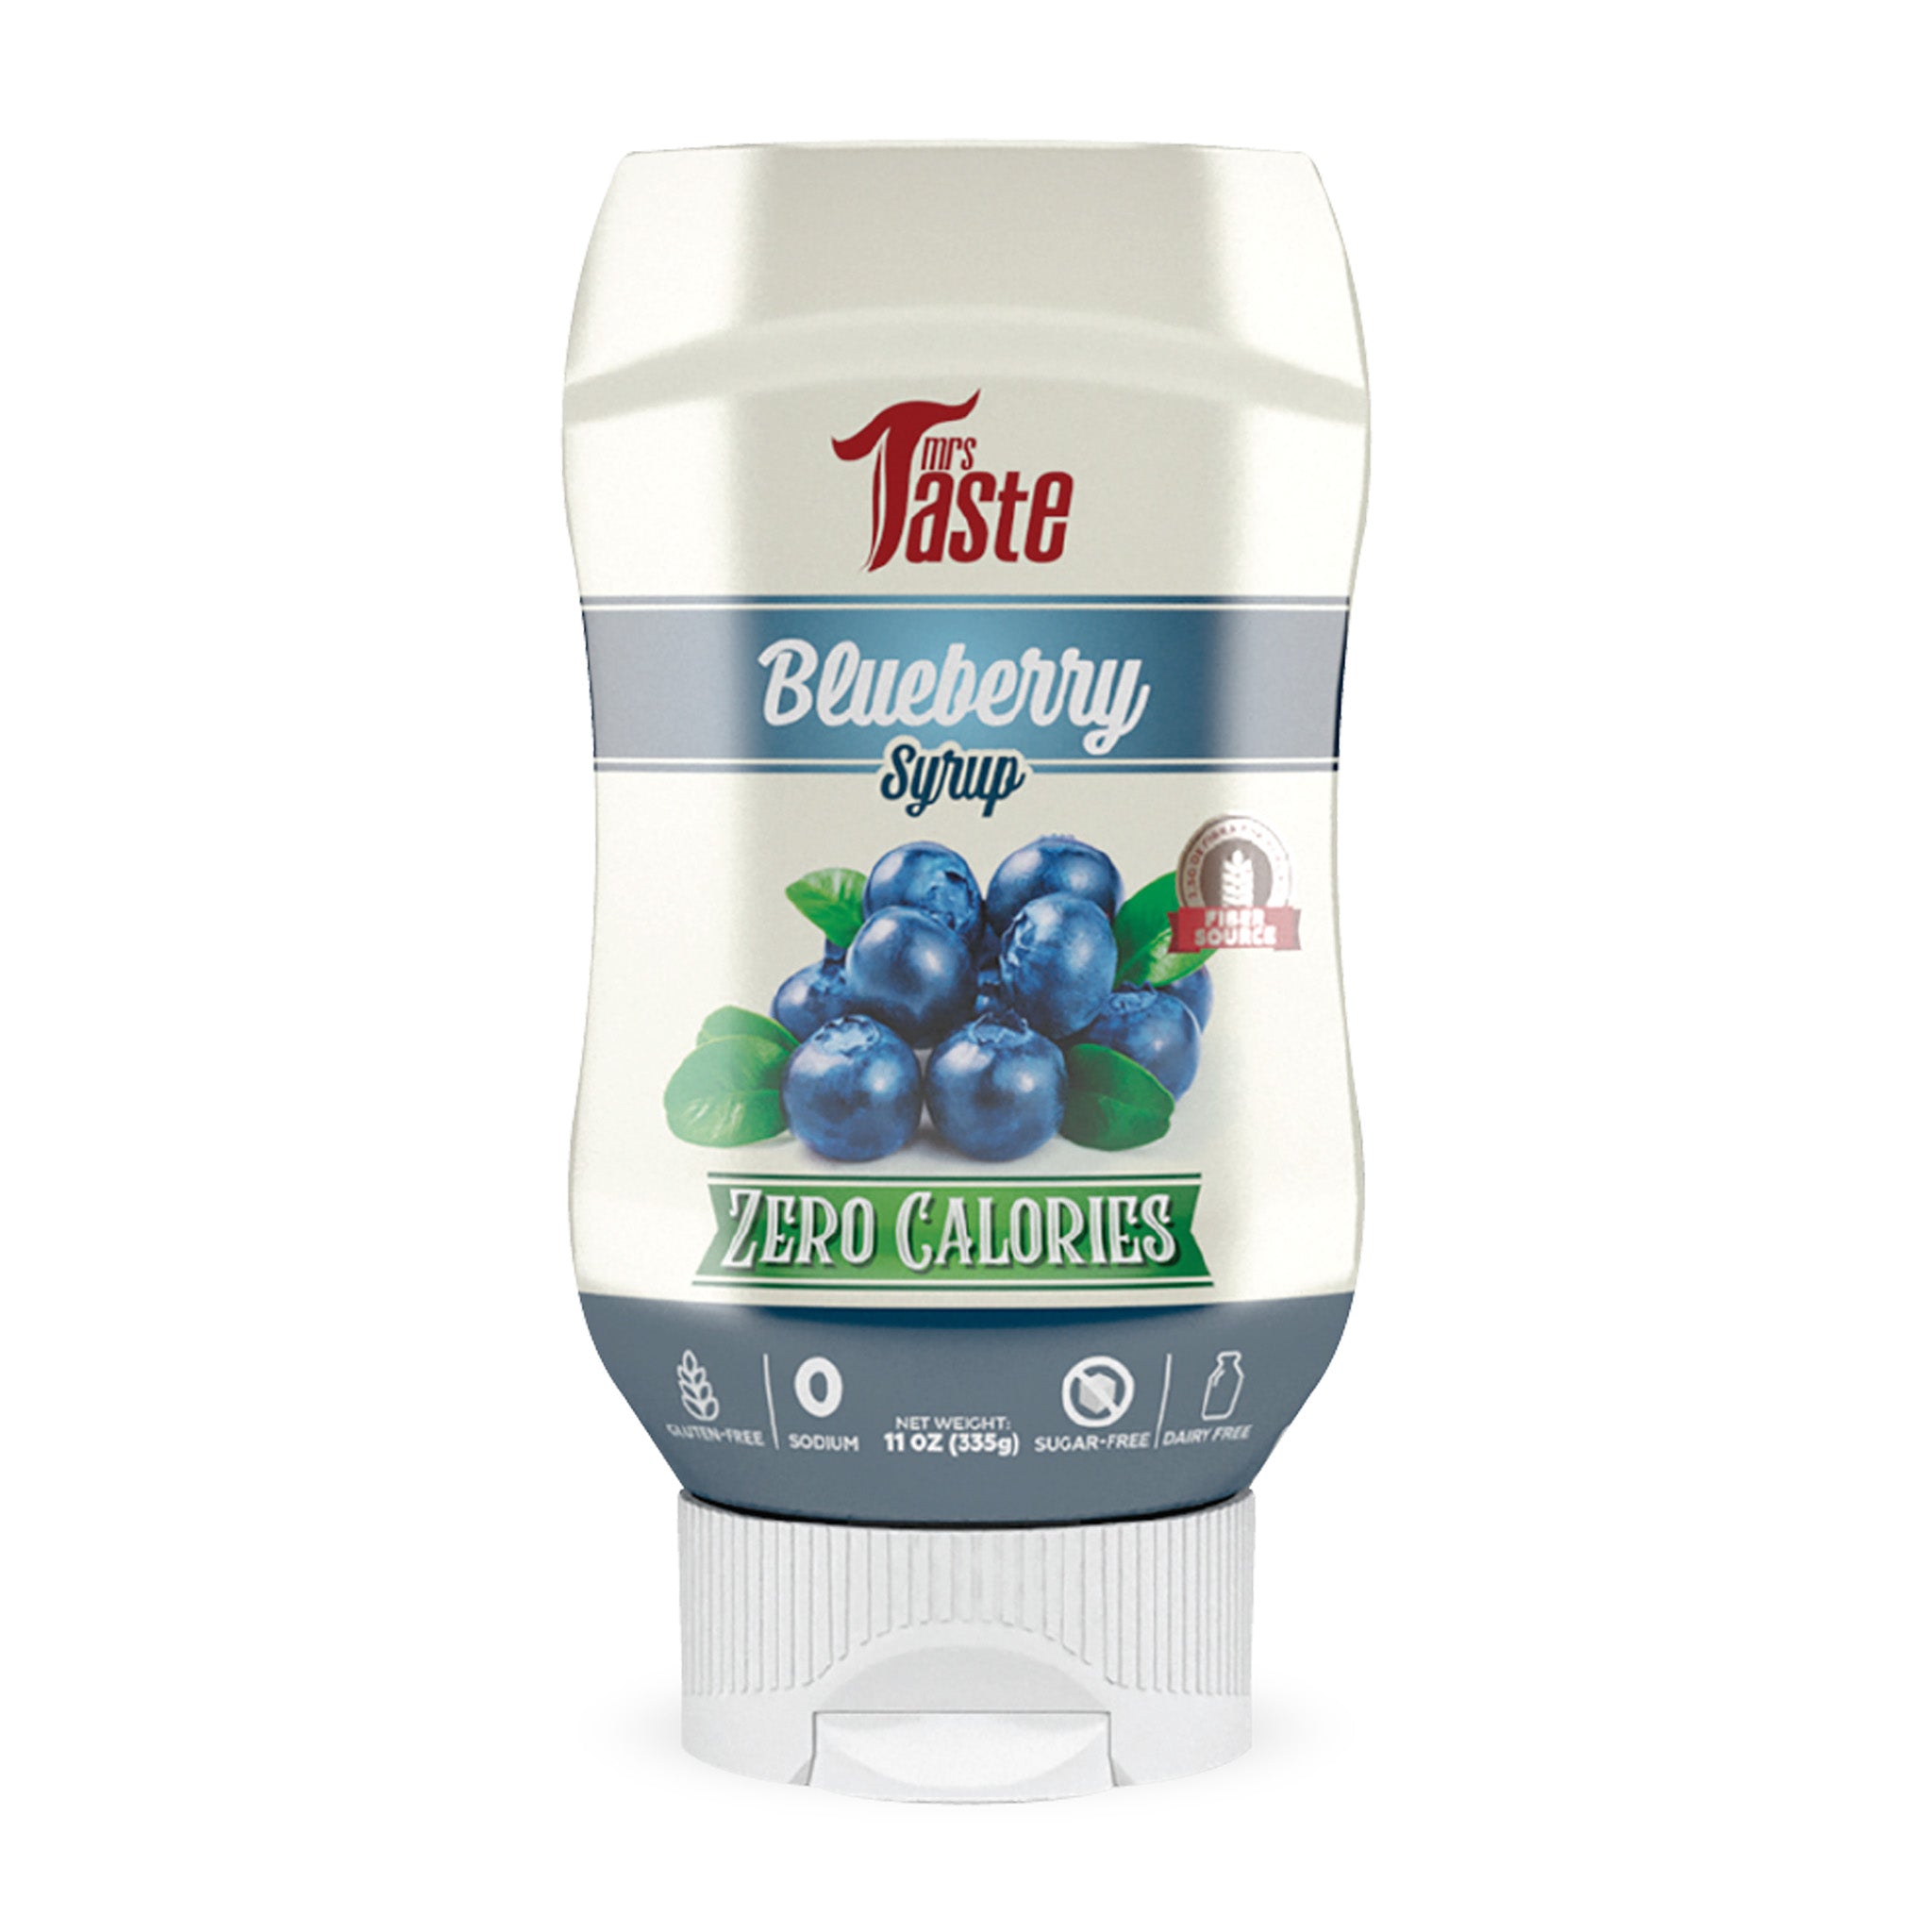 Mrs. Taste Blueberry Syrup (335g)